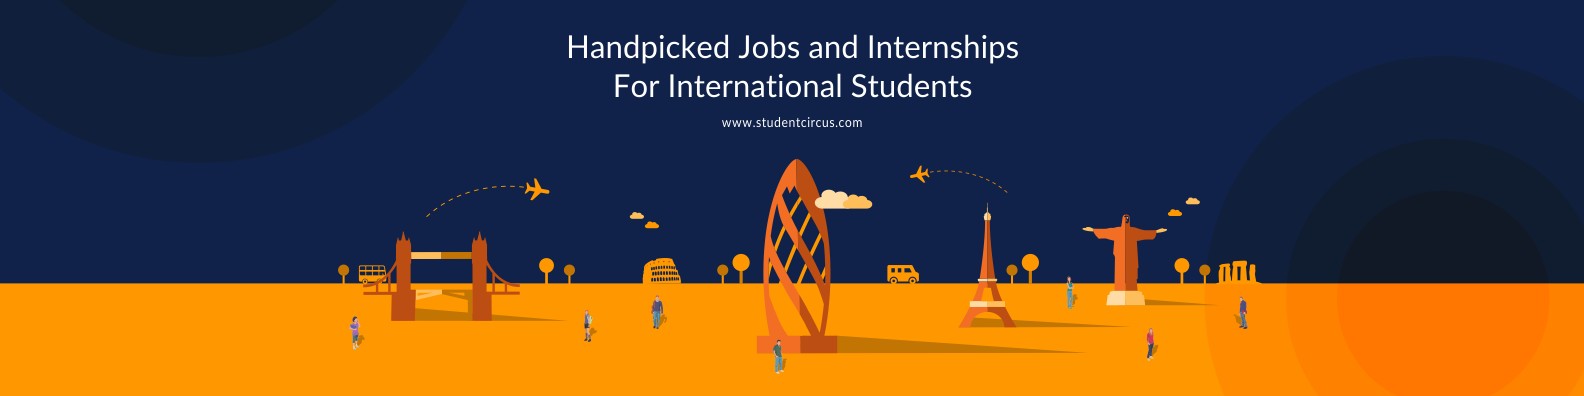 Handpicked jobs and internships for international students